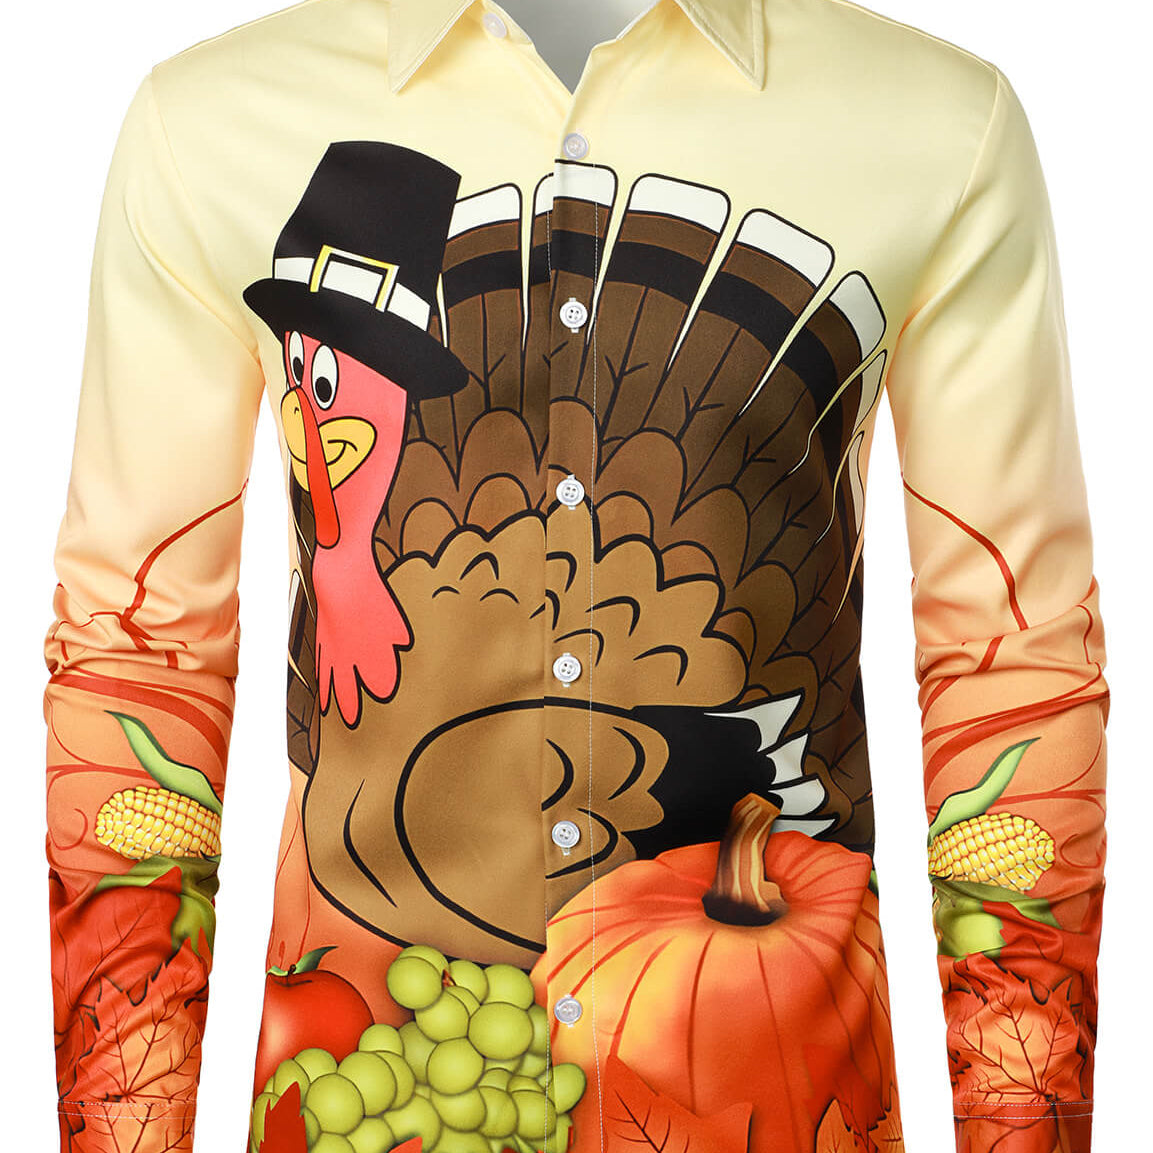 Men's Holiday Thanksgiving Day Cute Cartoon Turkey Button Long Sleeve Shirt